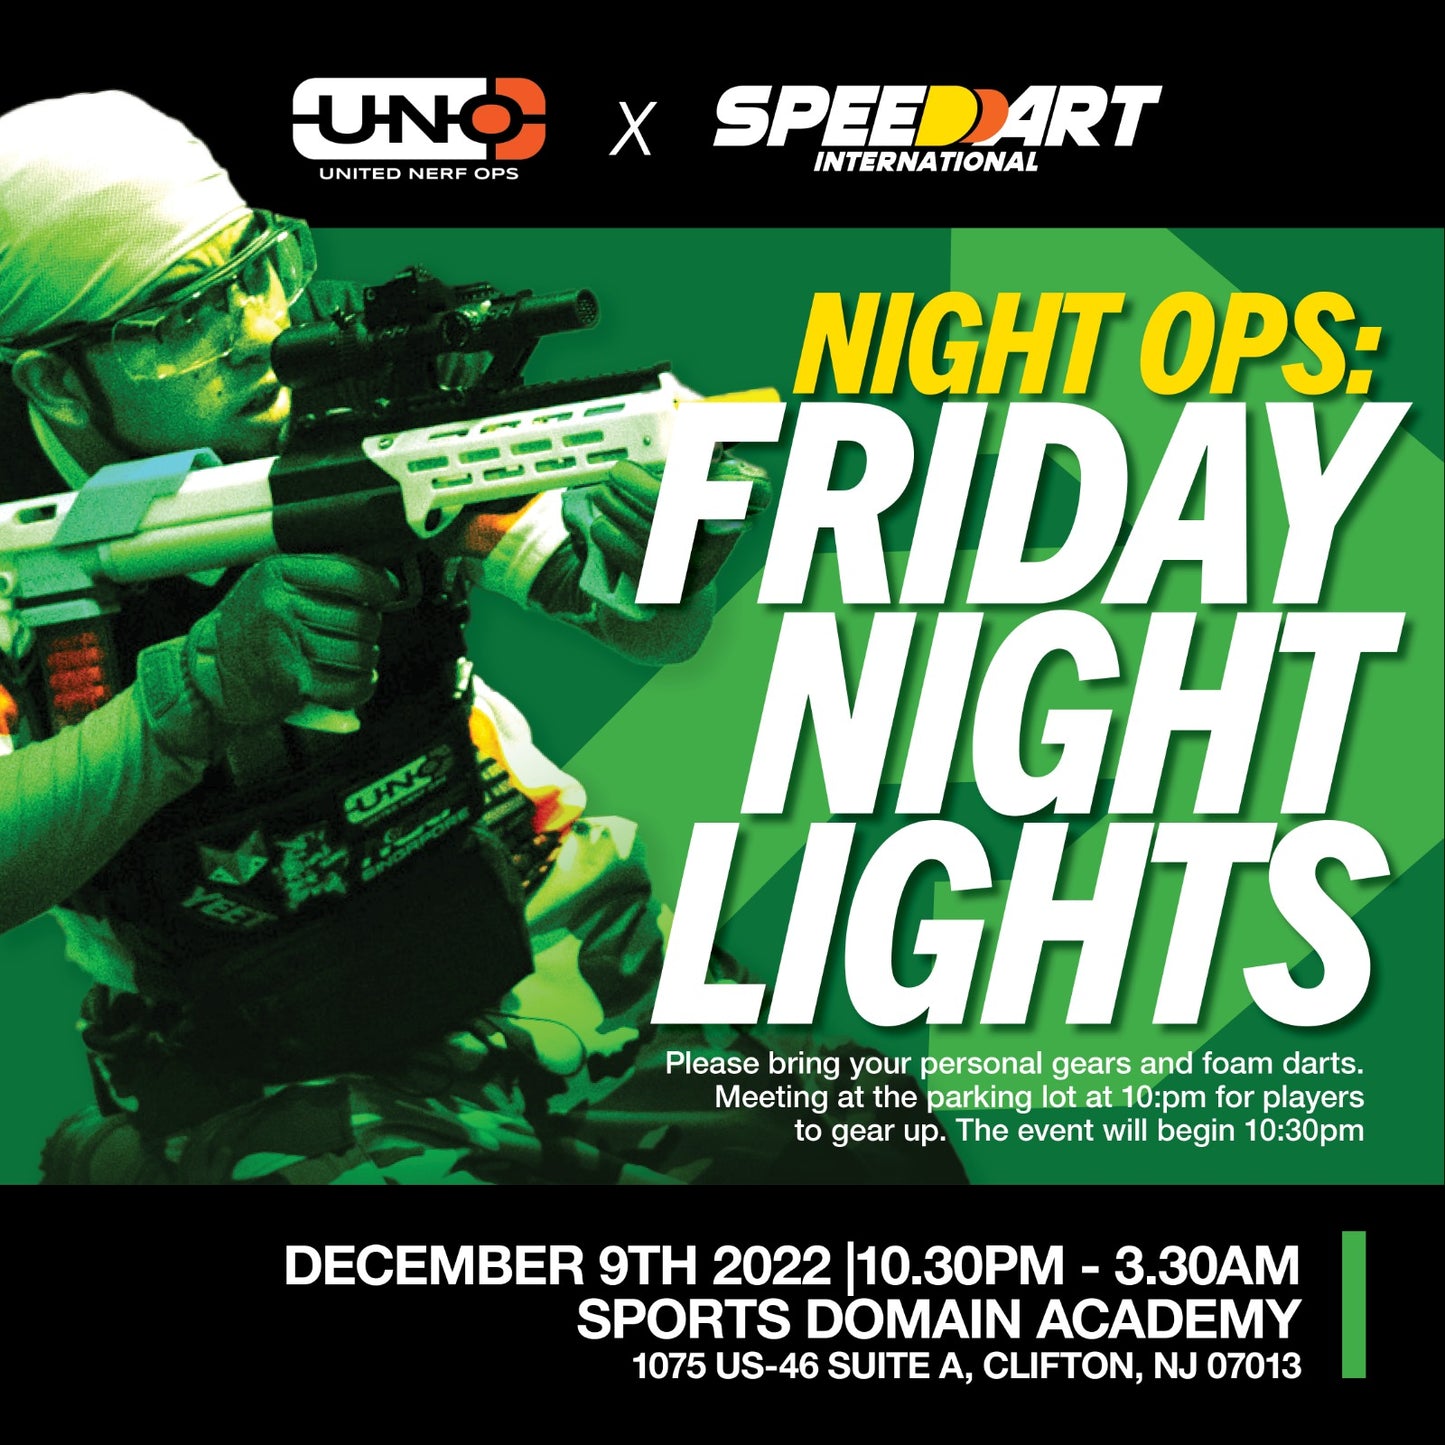 Event #7: UNO X Speed Dart Night OPs: Friday Night Lights